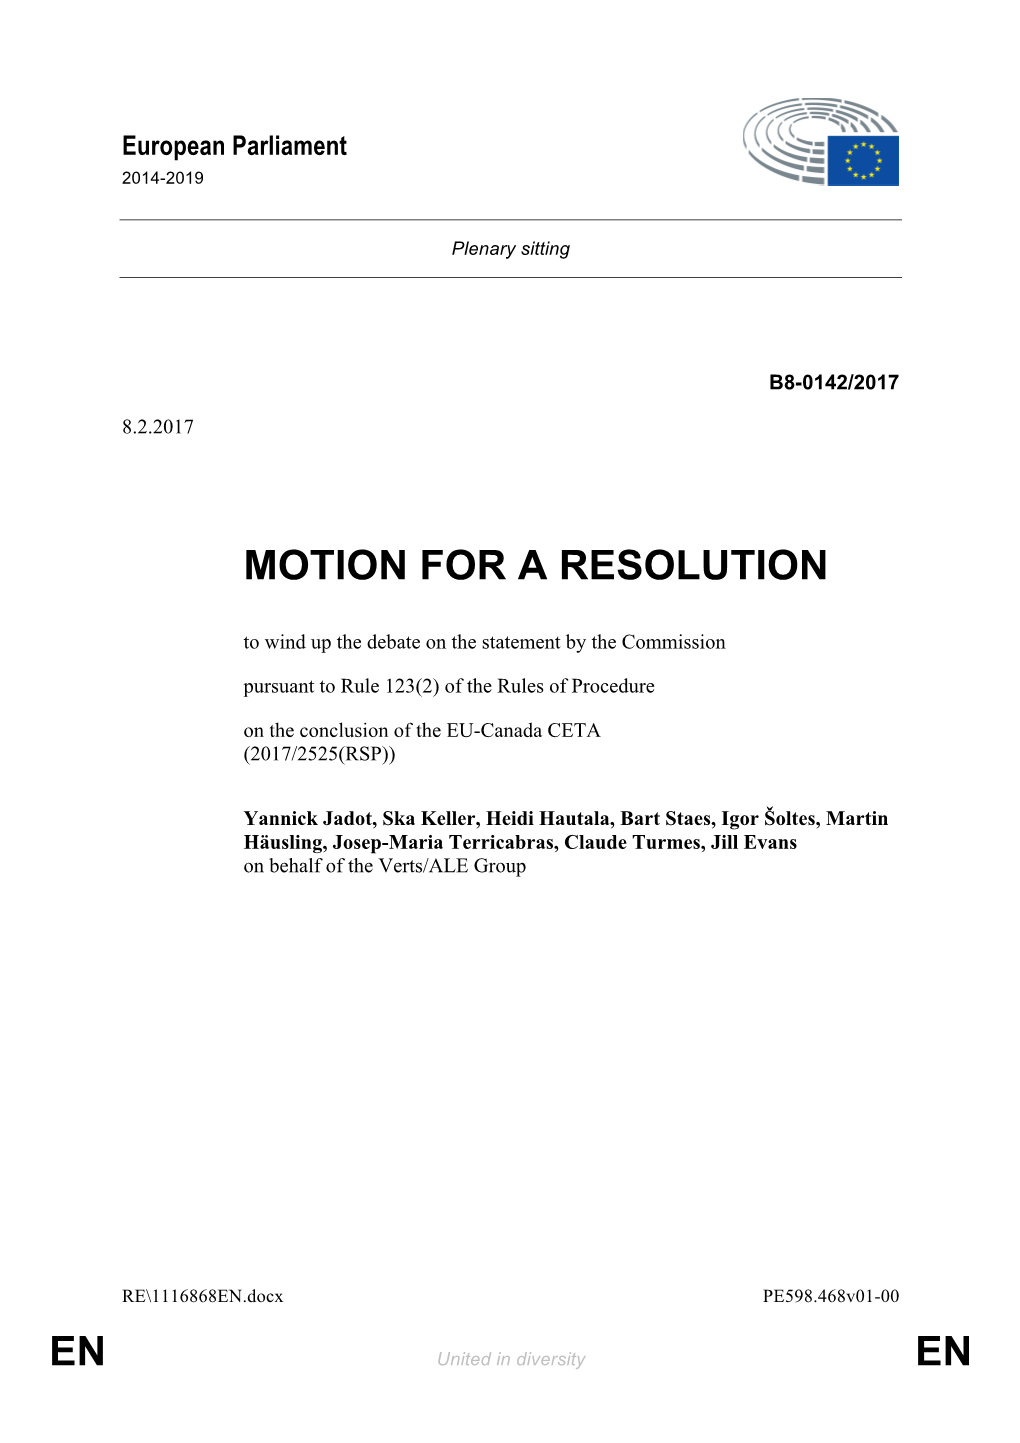 Greens/EFA CETA Resolution